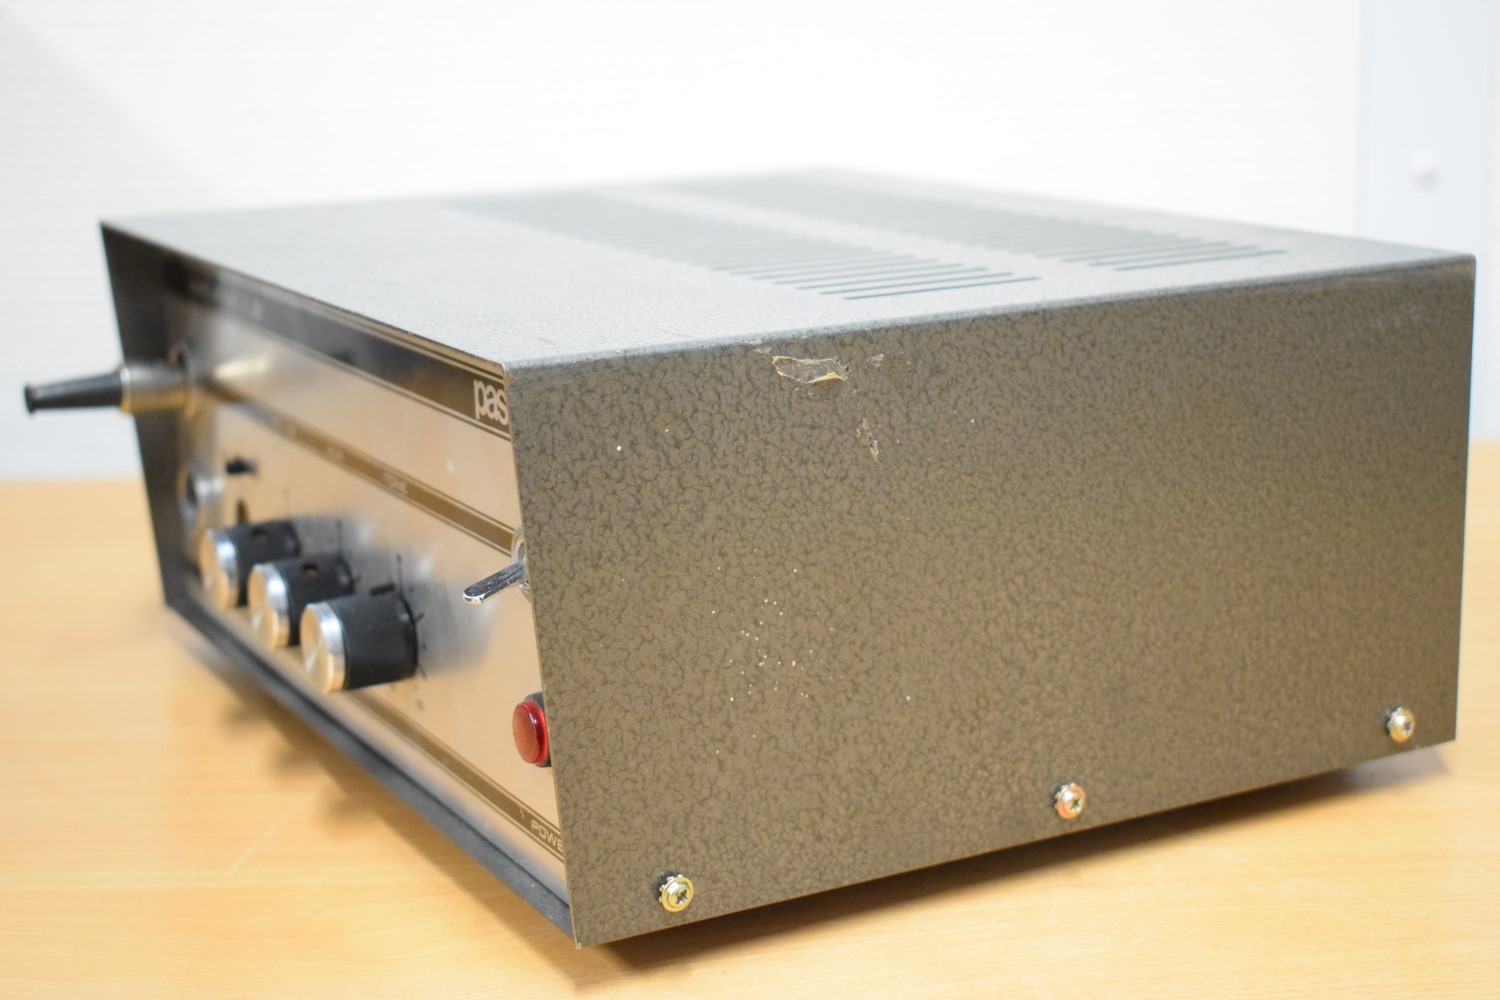 PASO V.21 100 Volts amplifier